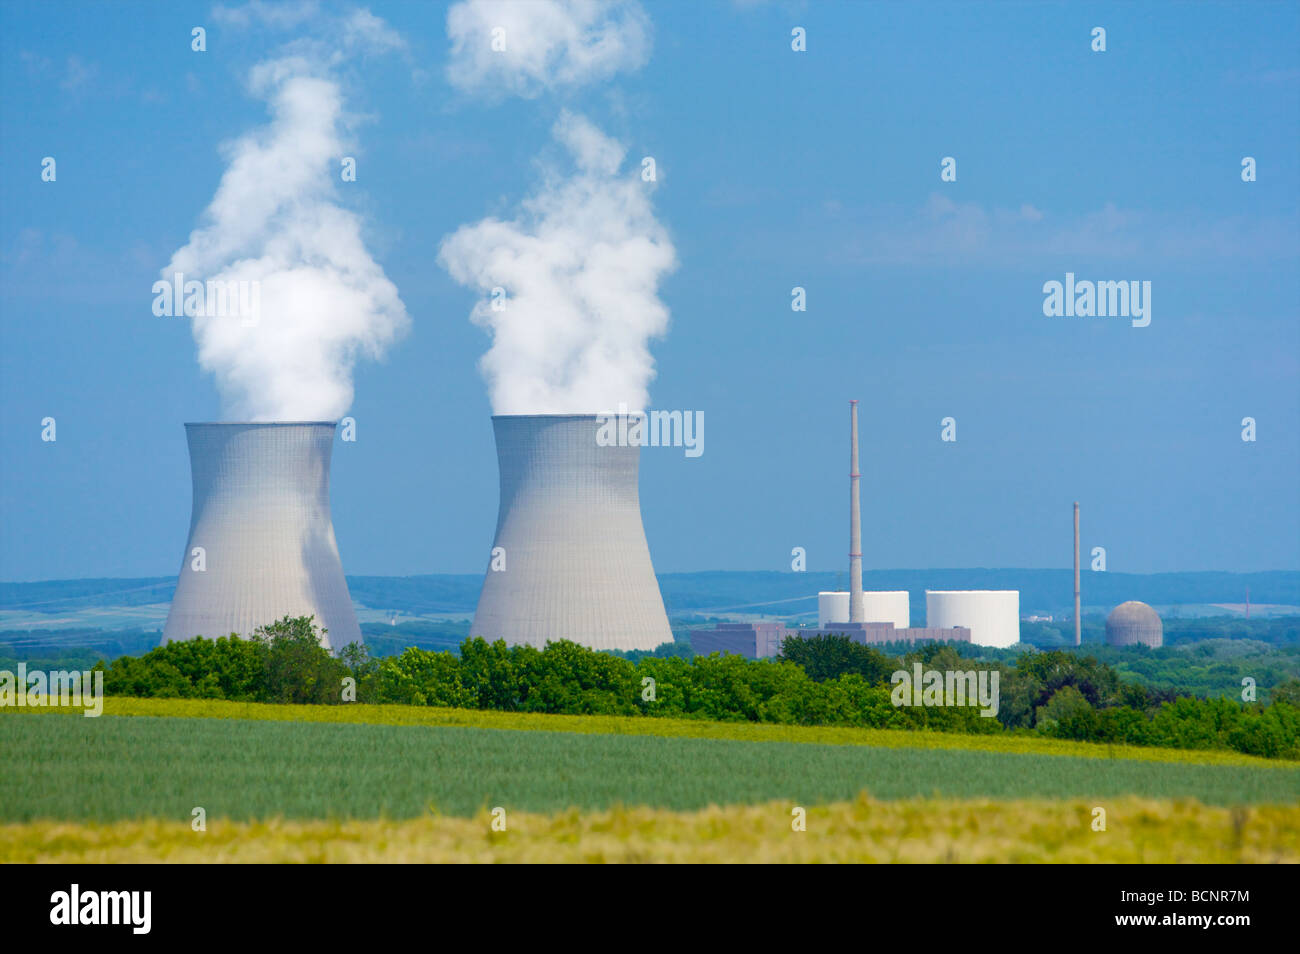 Gundremmingen nuclear power plant in Bavaria, Germany. 2 active BWR reactors. Kernkraftwerk Gundremmingen, Bayern, Deutschland. Stock Photo